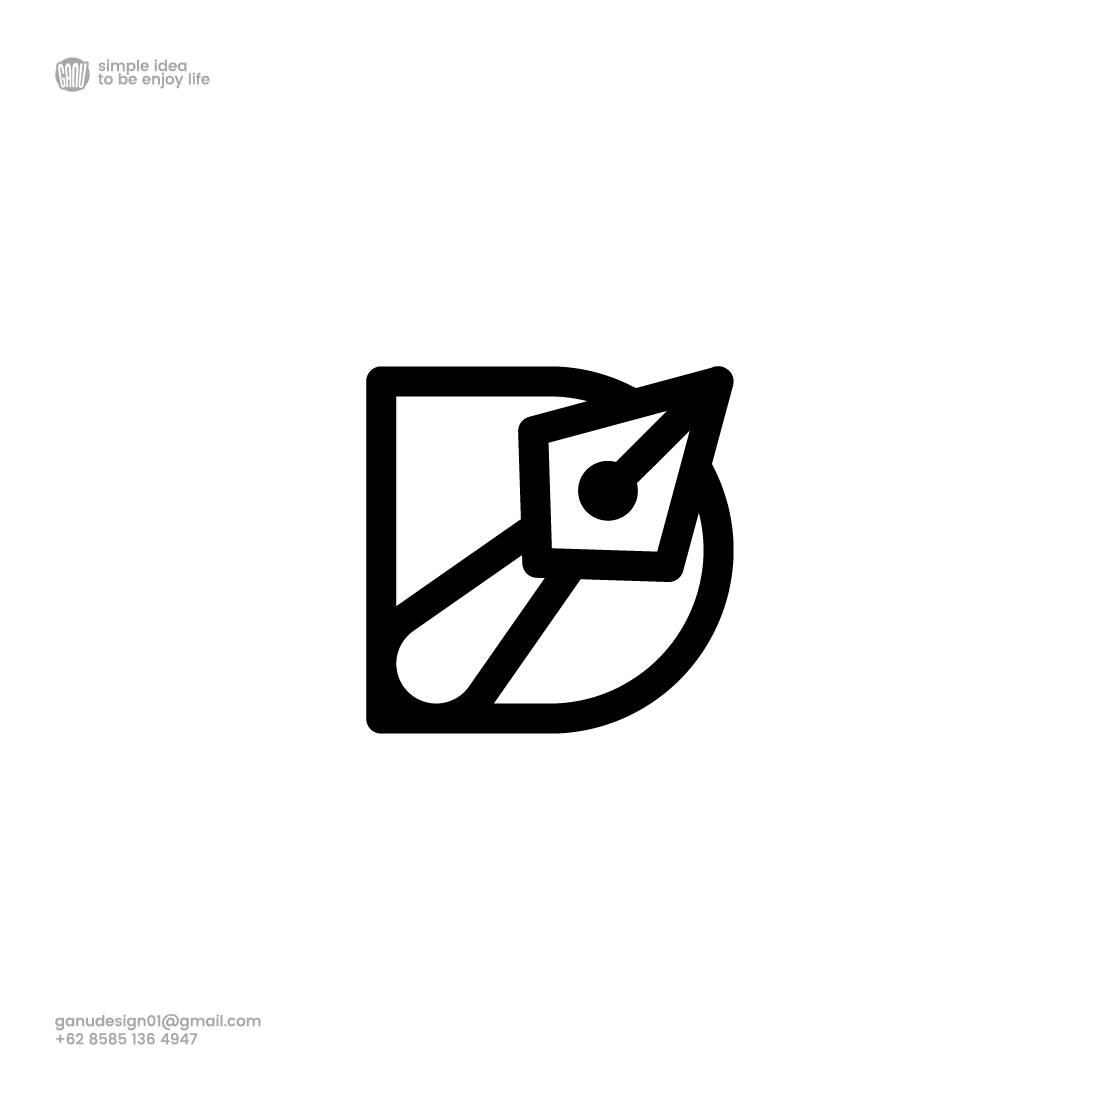 D letter logo with Pen design preview image.